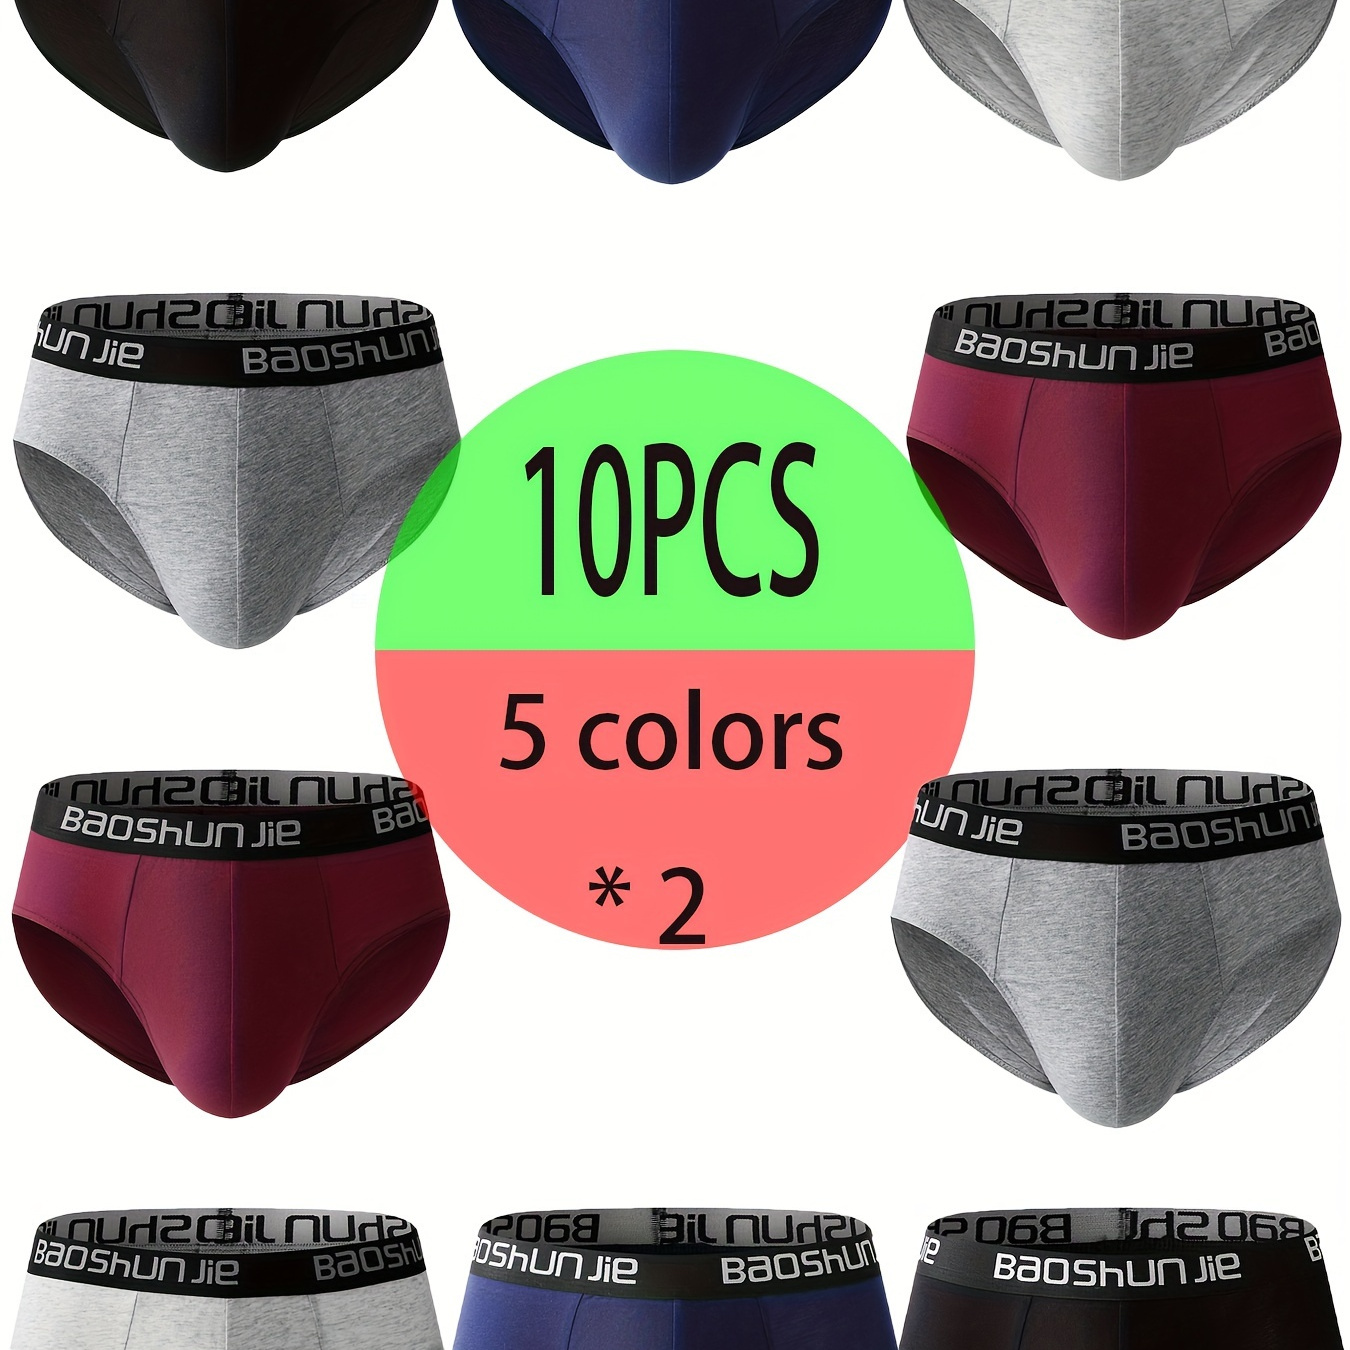 

10pcs Men's Cotton Briefs Breathable Comfy Stretchy Triangle Underwear, Casual & Durable Solid Color Underpants For Men